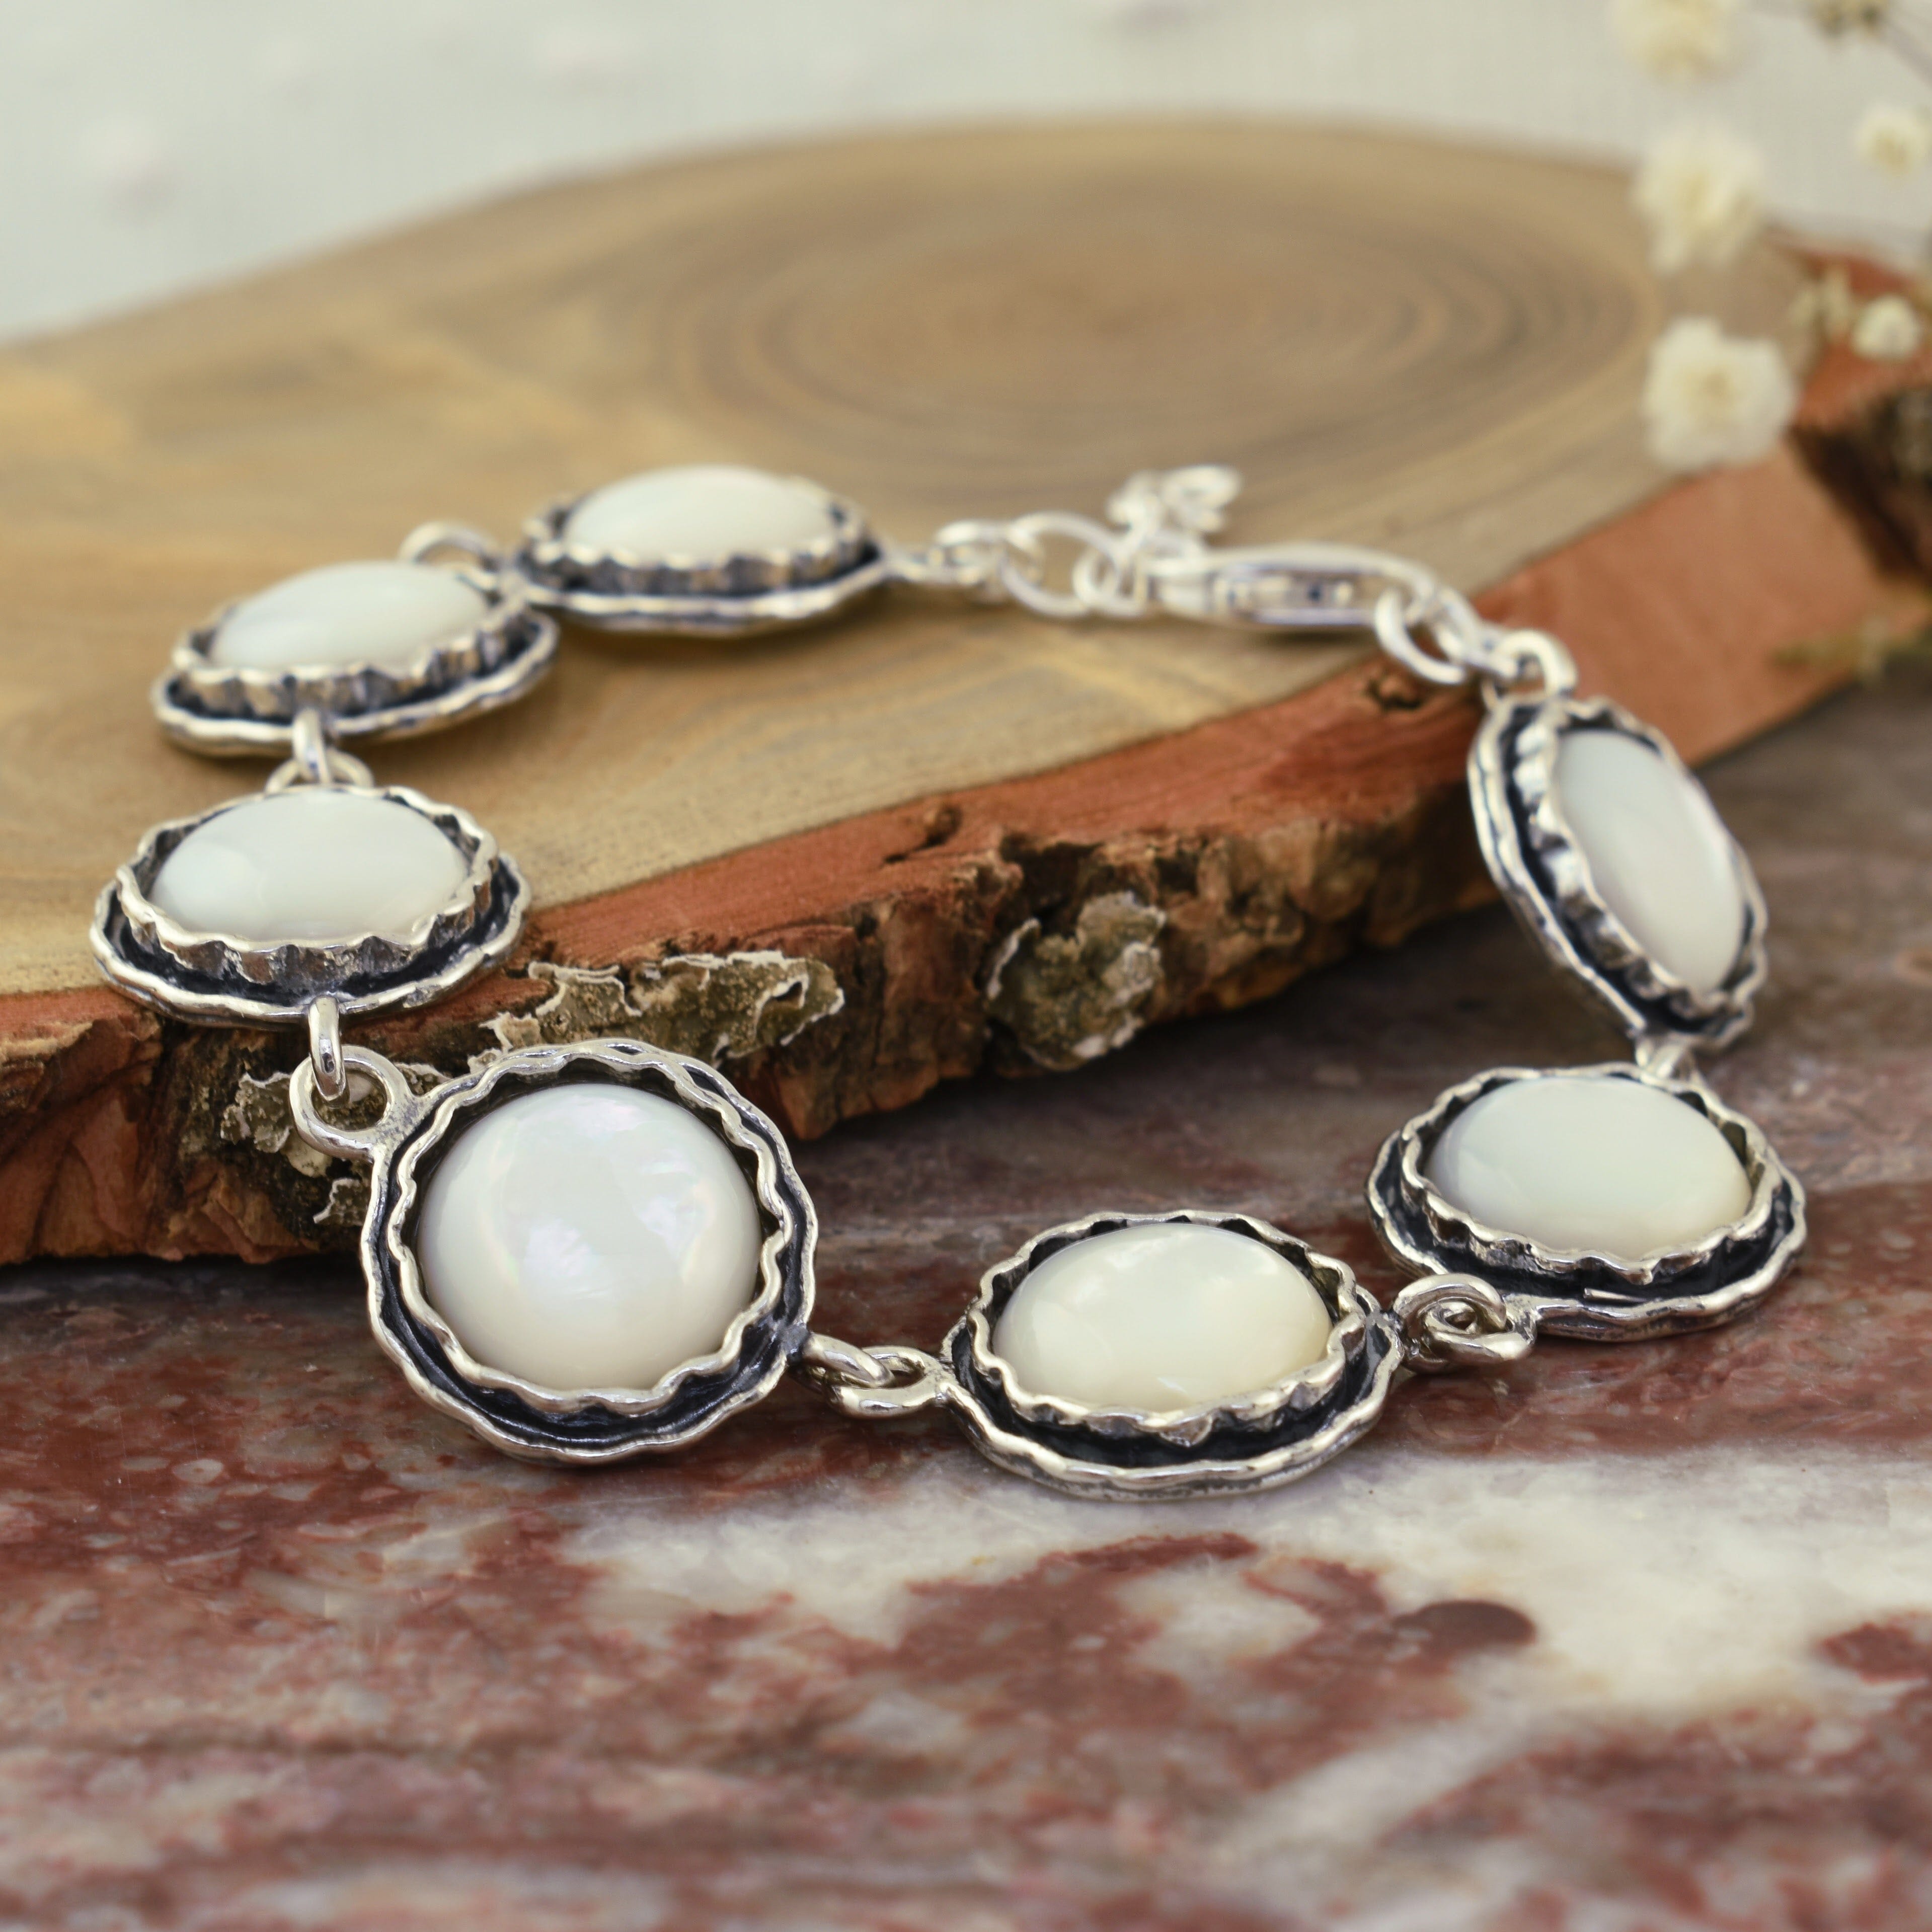 Mother of pearl bracelet set in sterling silver